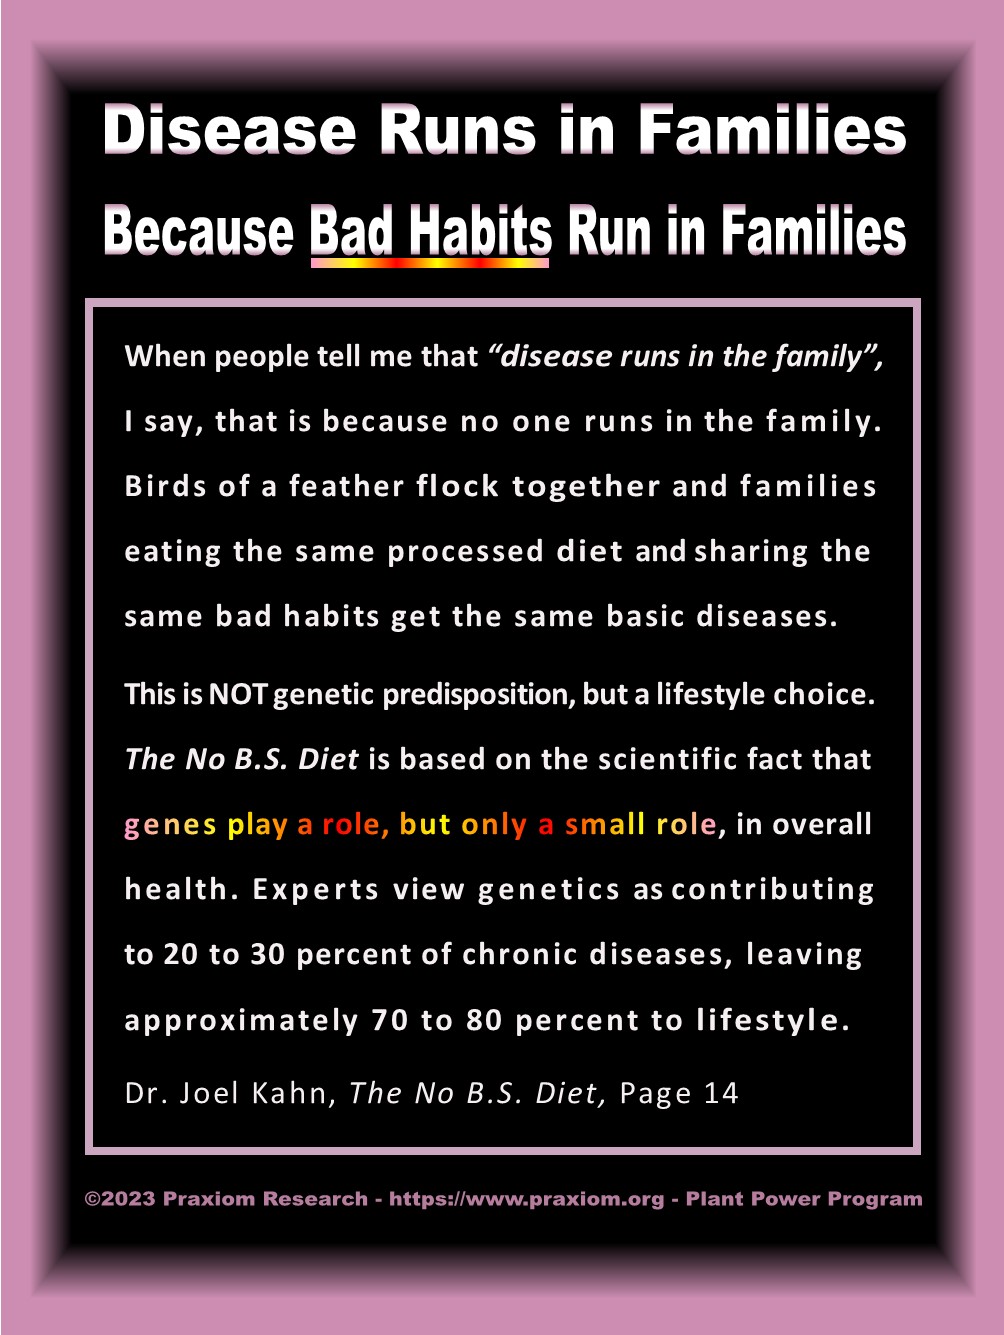 Disease runs in families because bad habits run in families